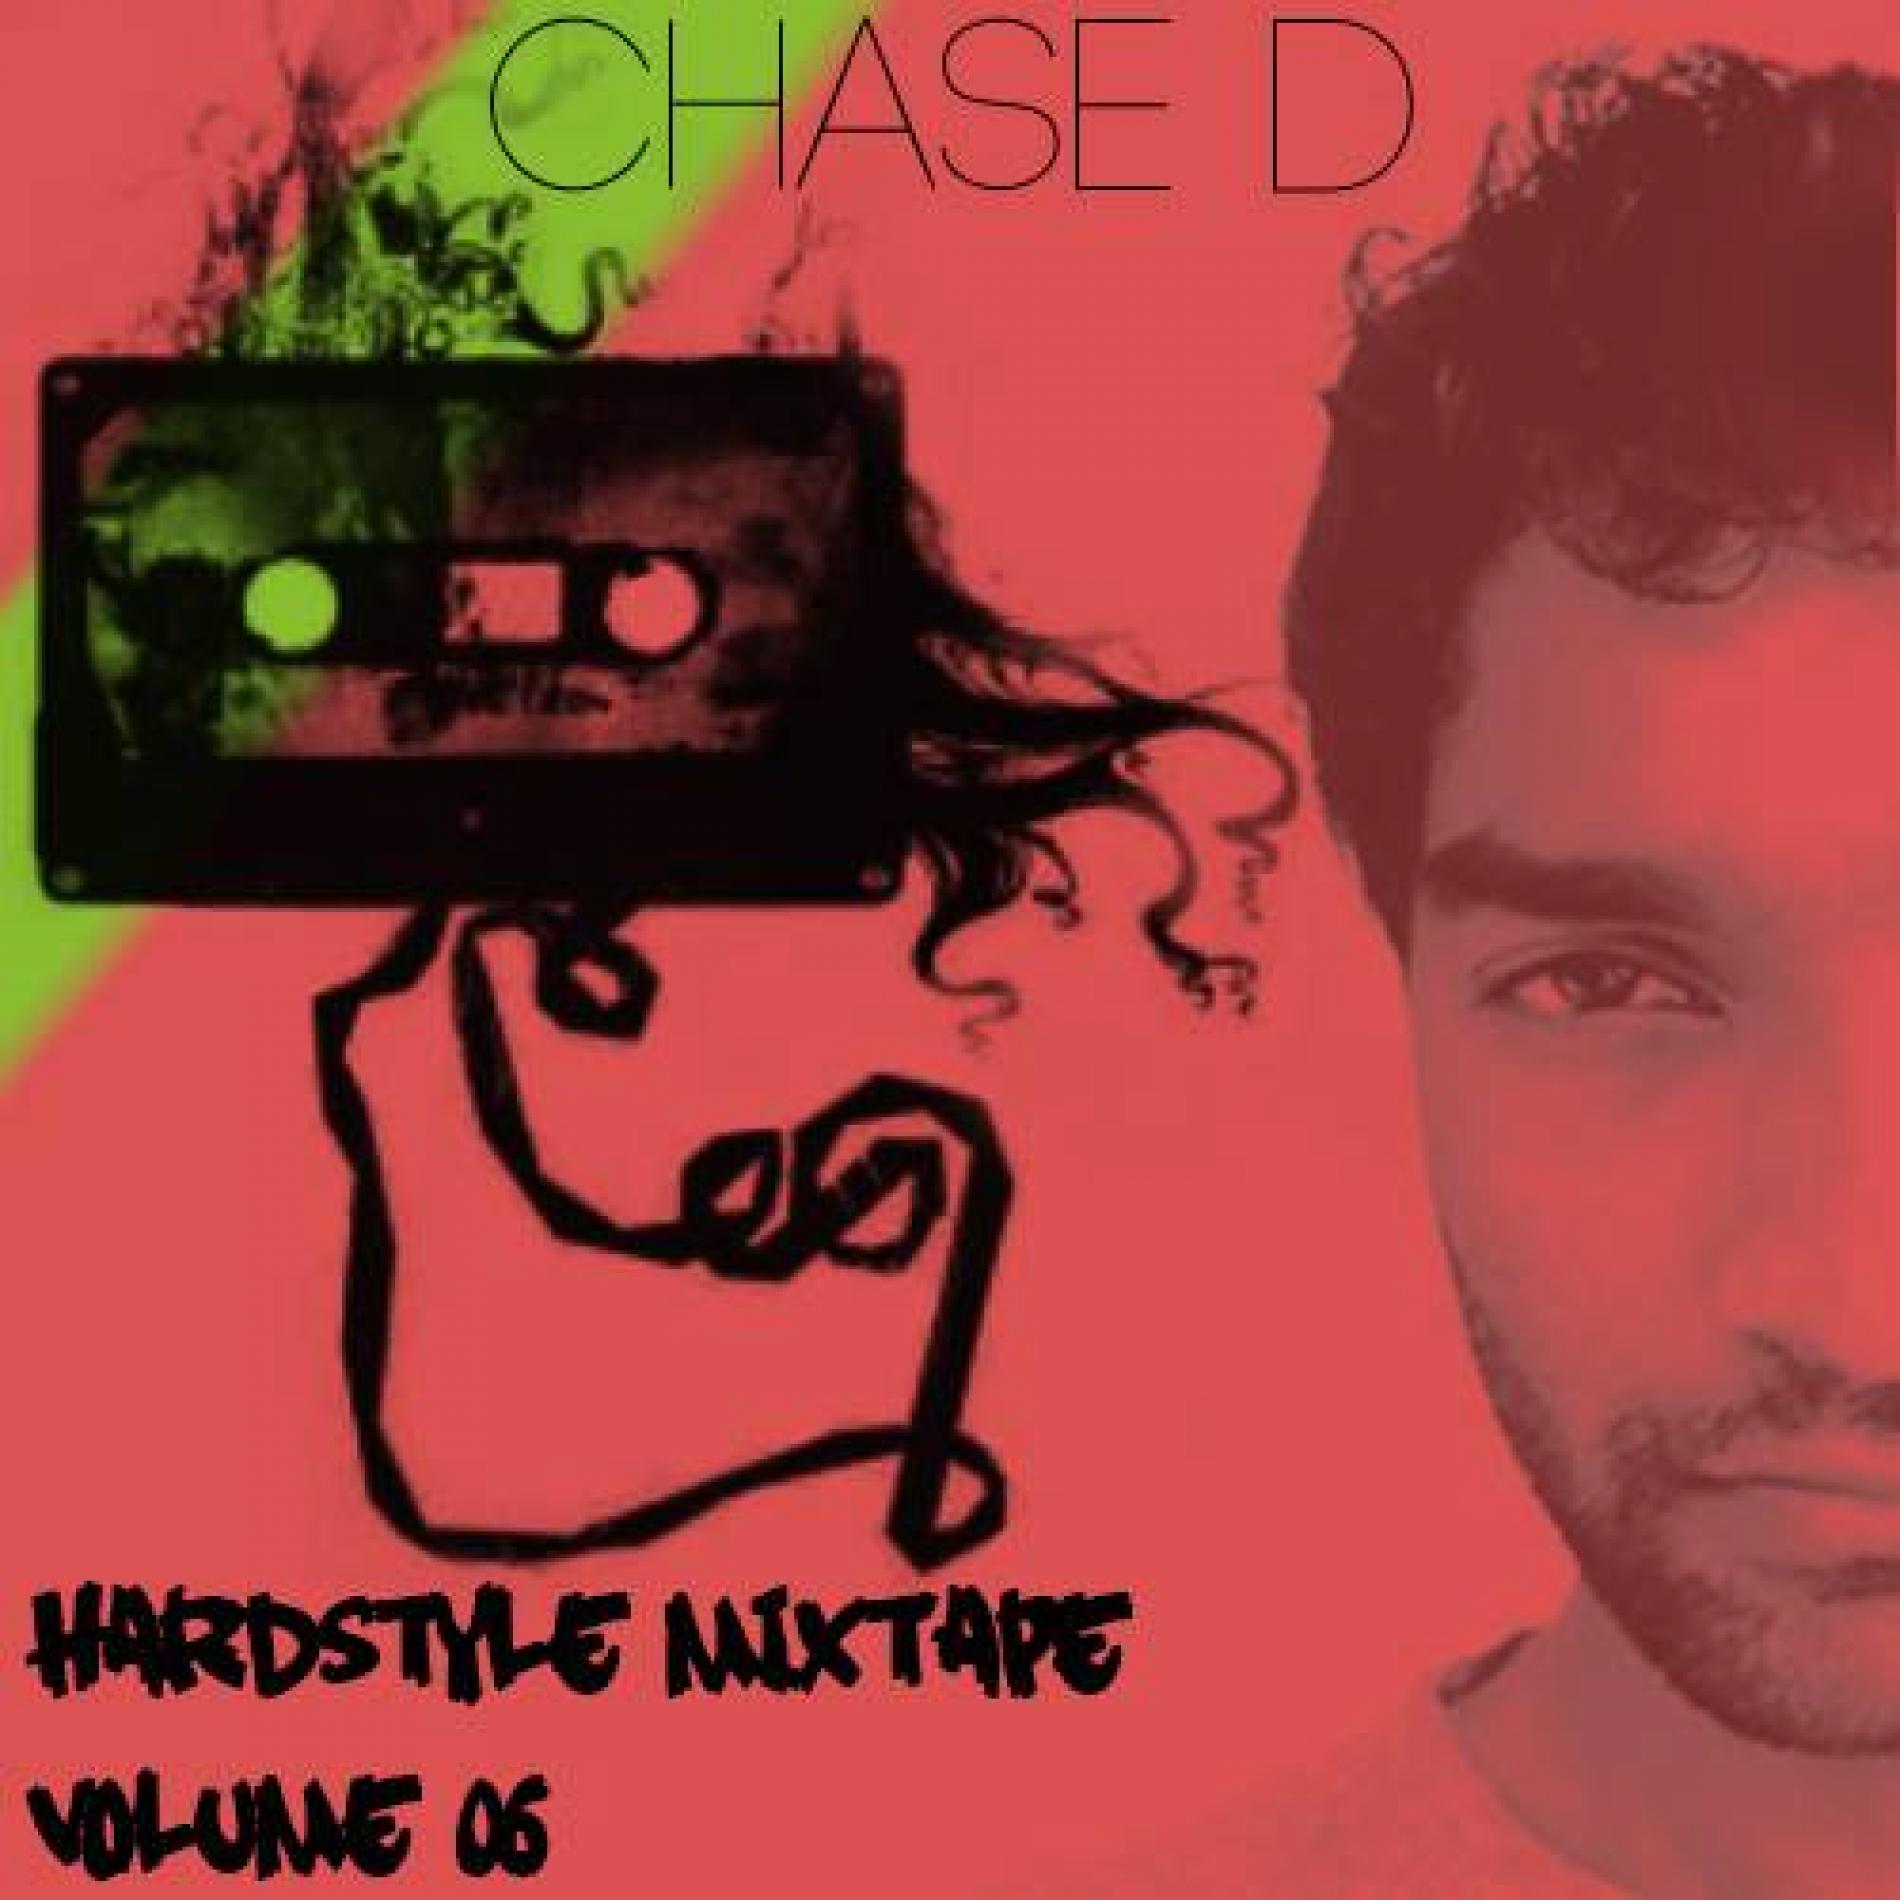 Chase D: Hardstyle MixTape – Volume 6